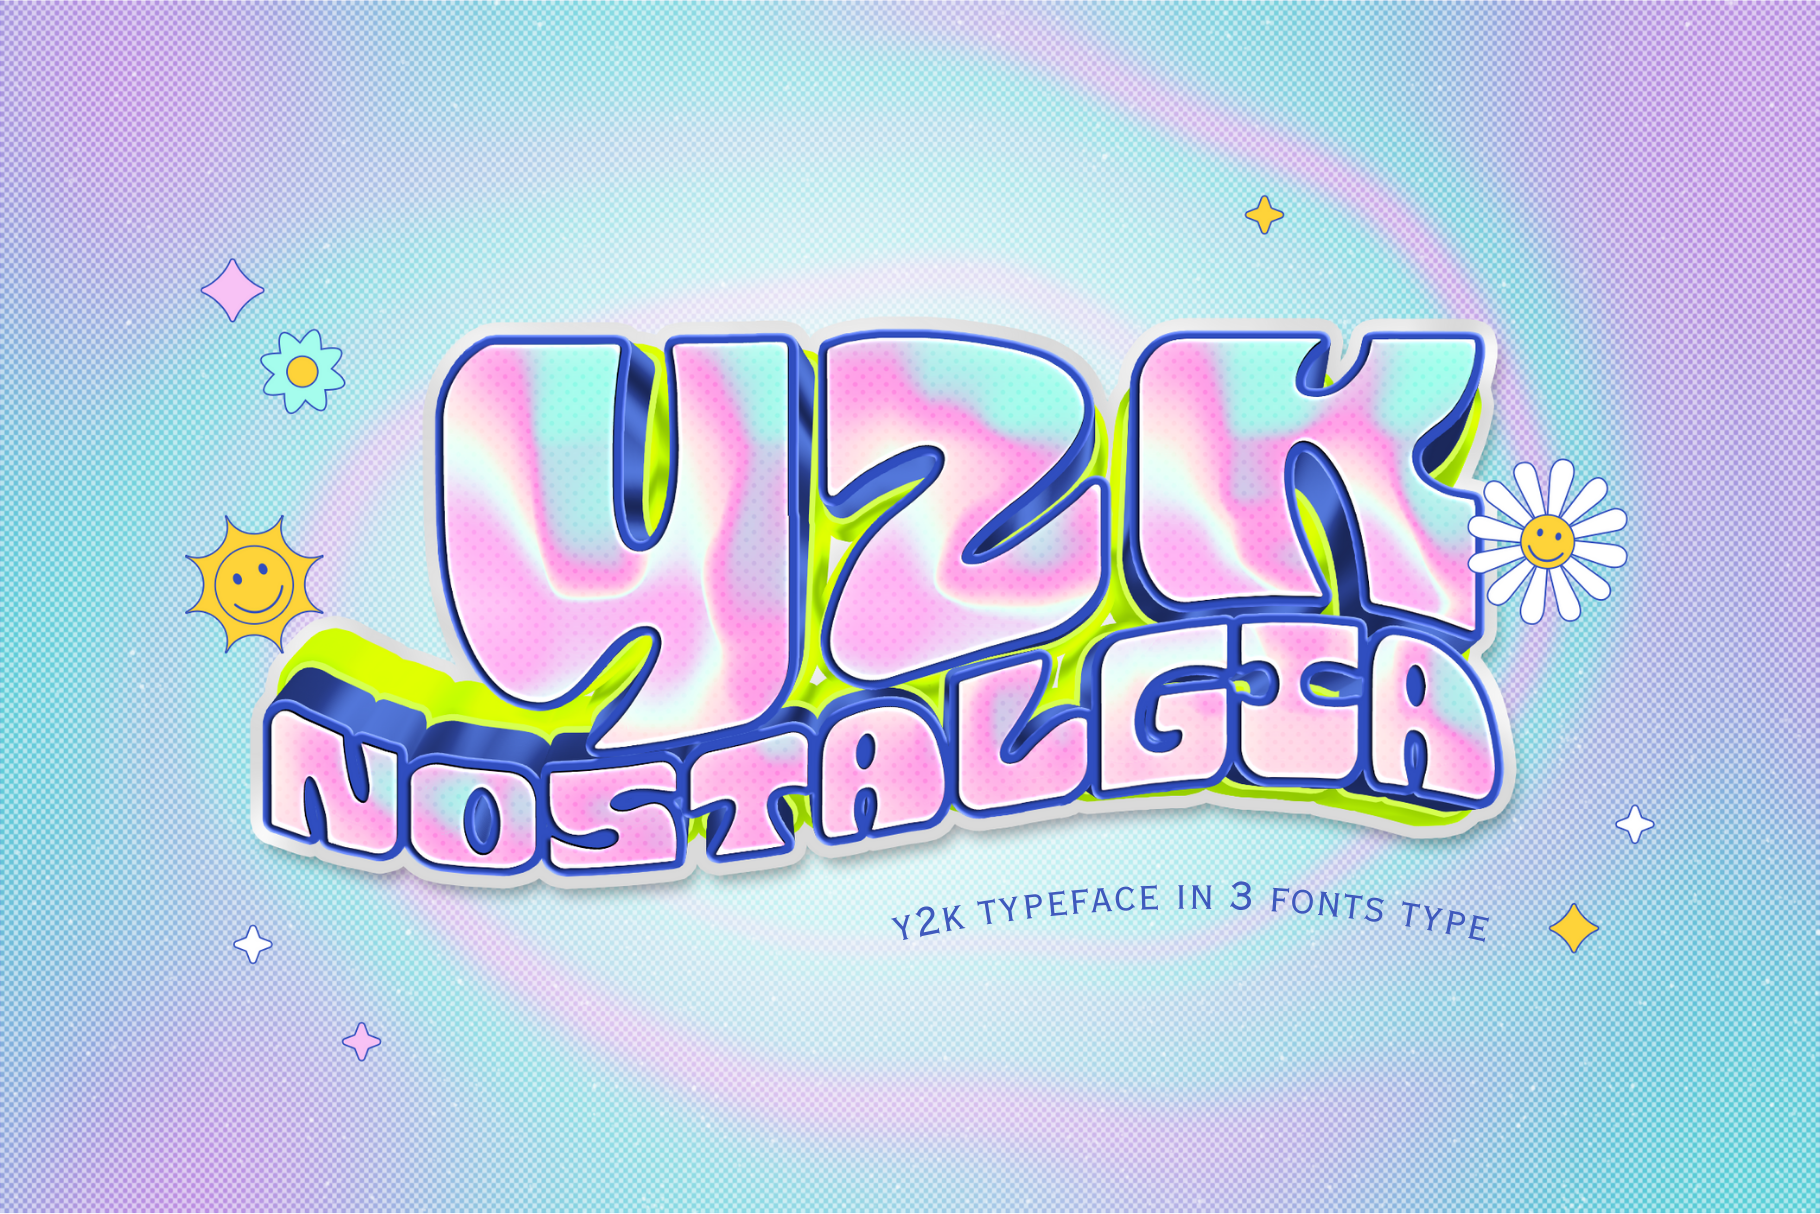 Y2K Nostalgia Font